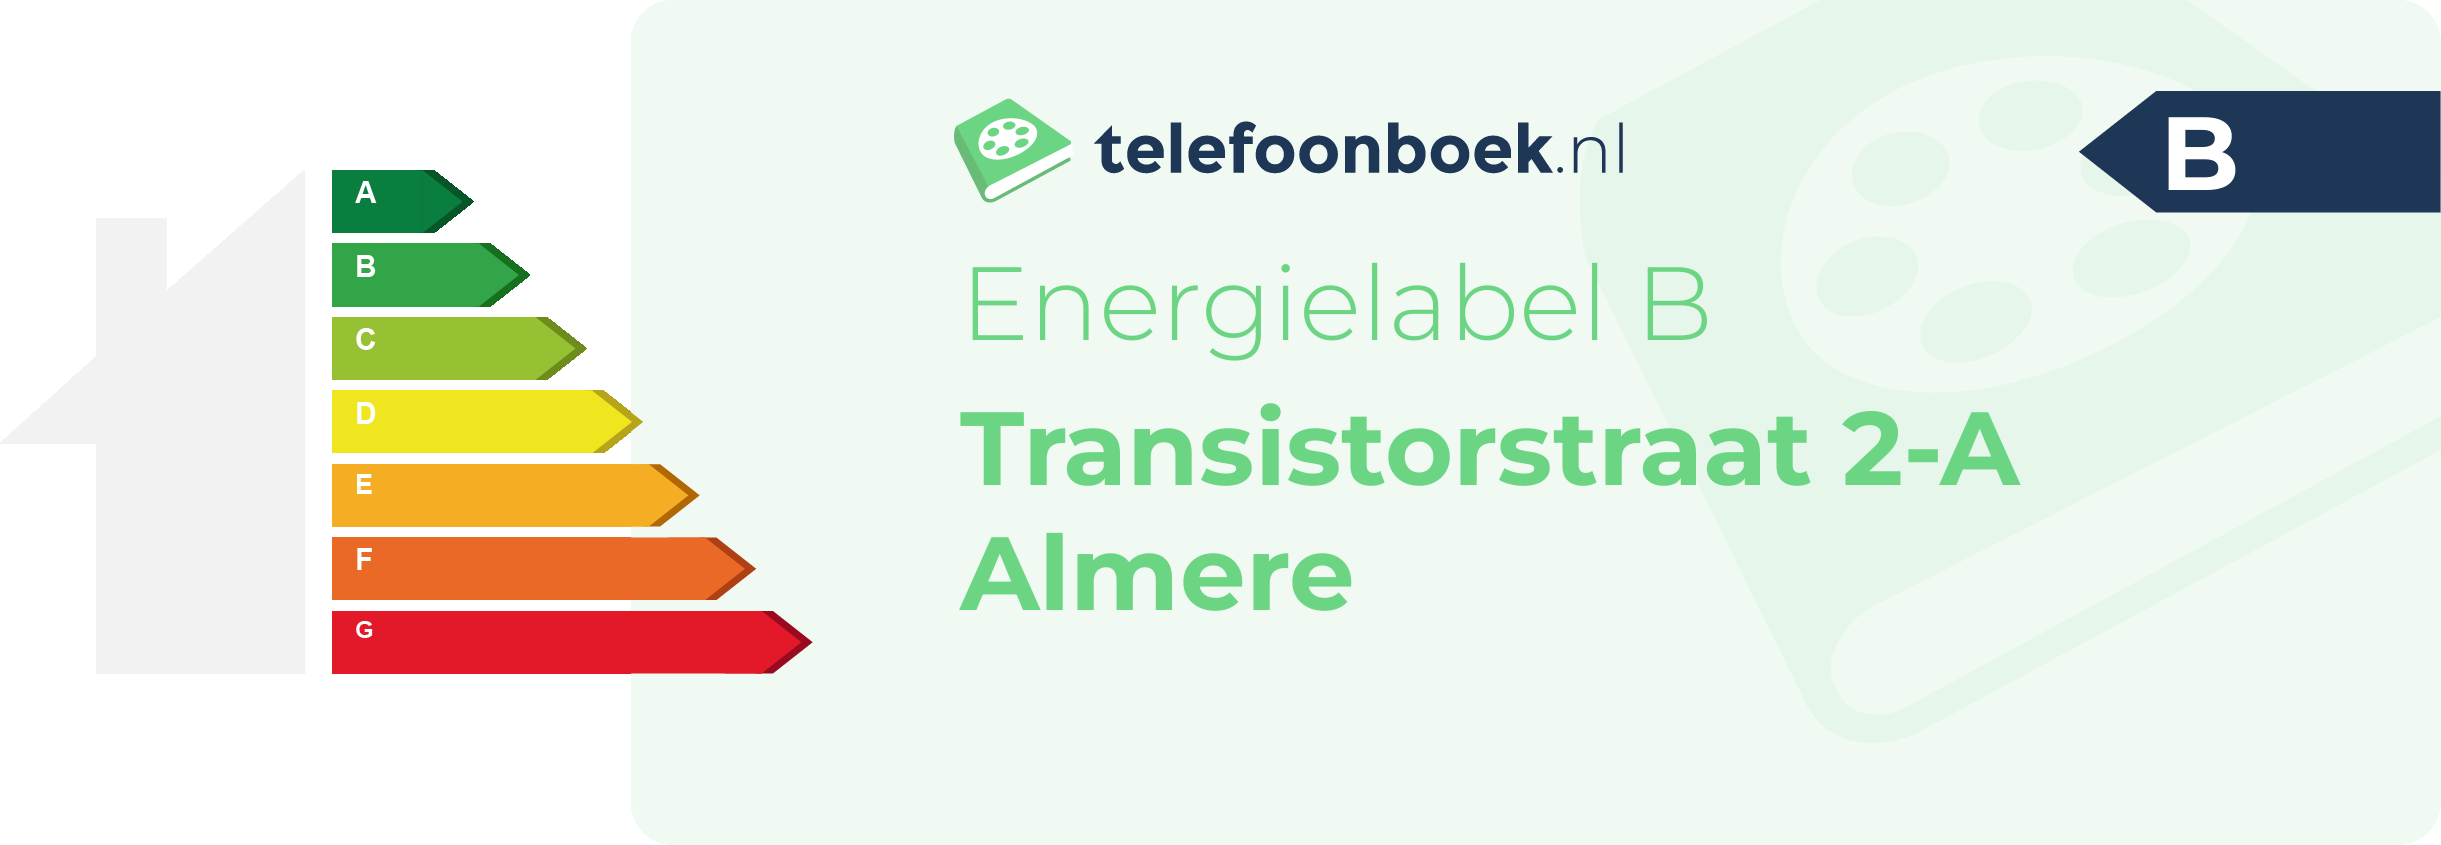 Energielabel Transistorstraat 2-A Almere